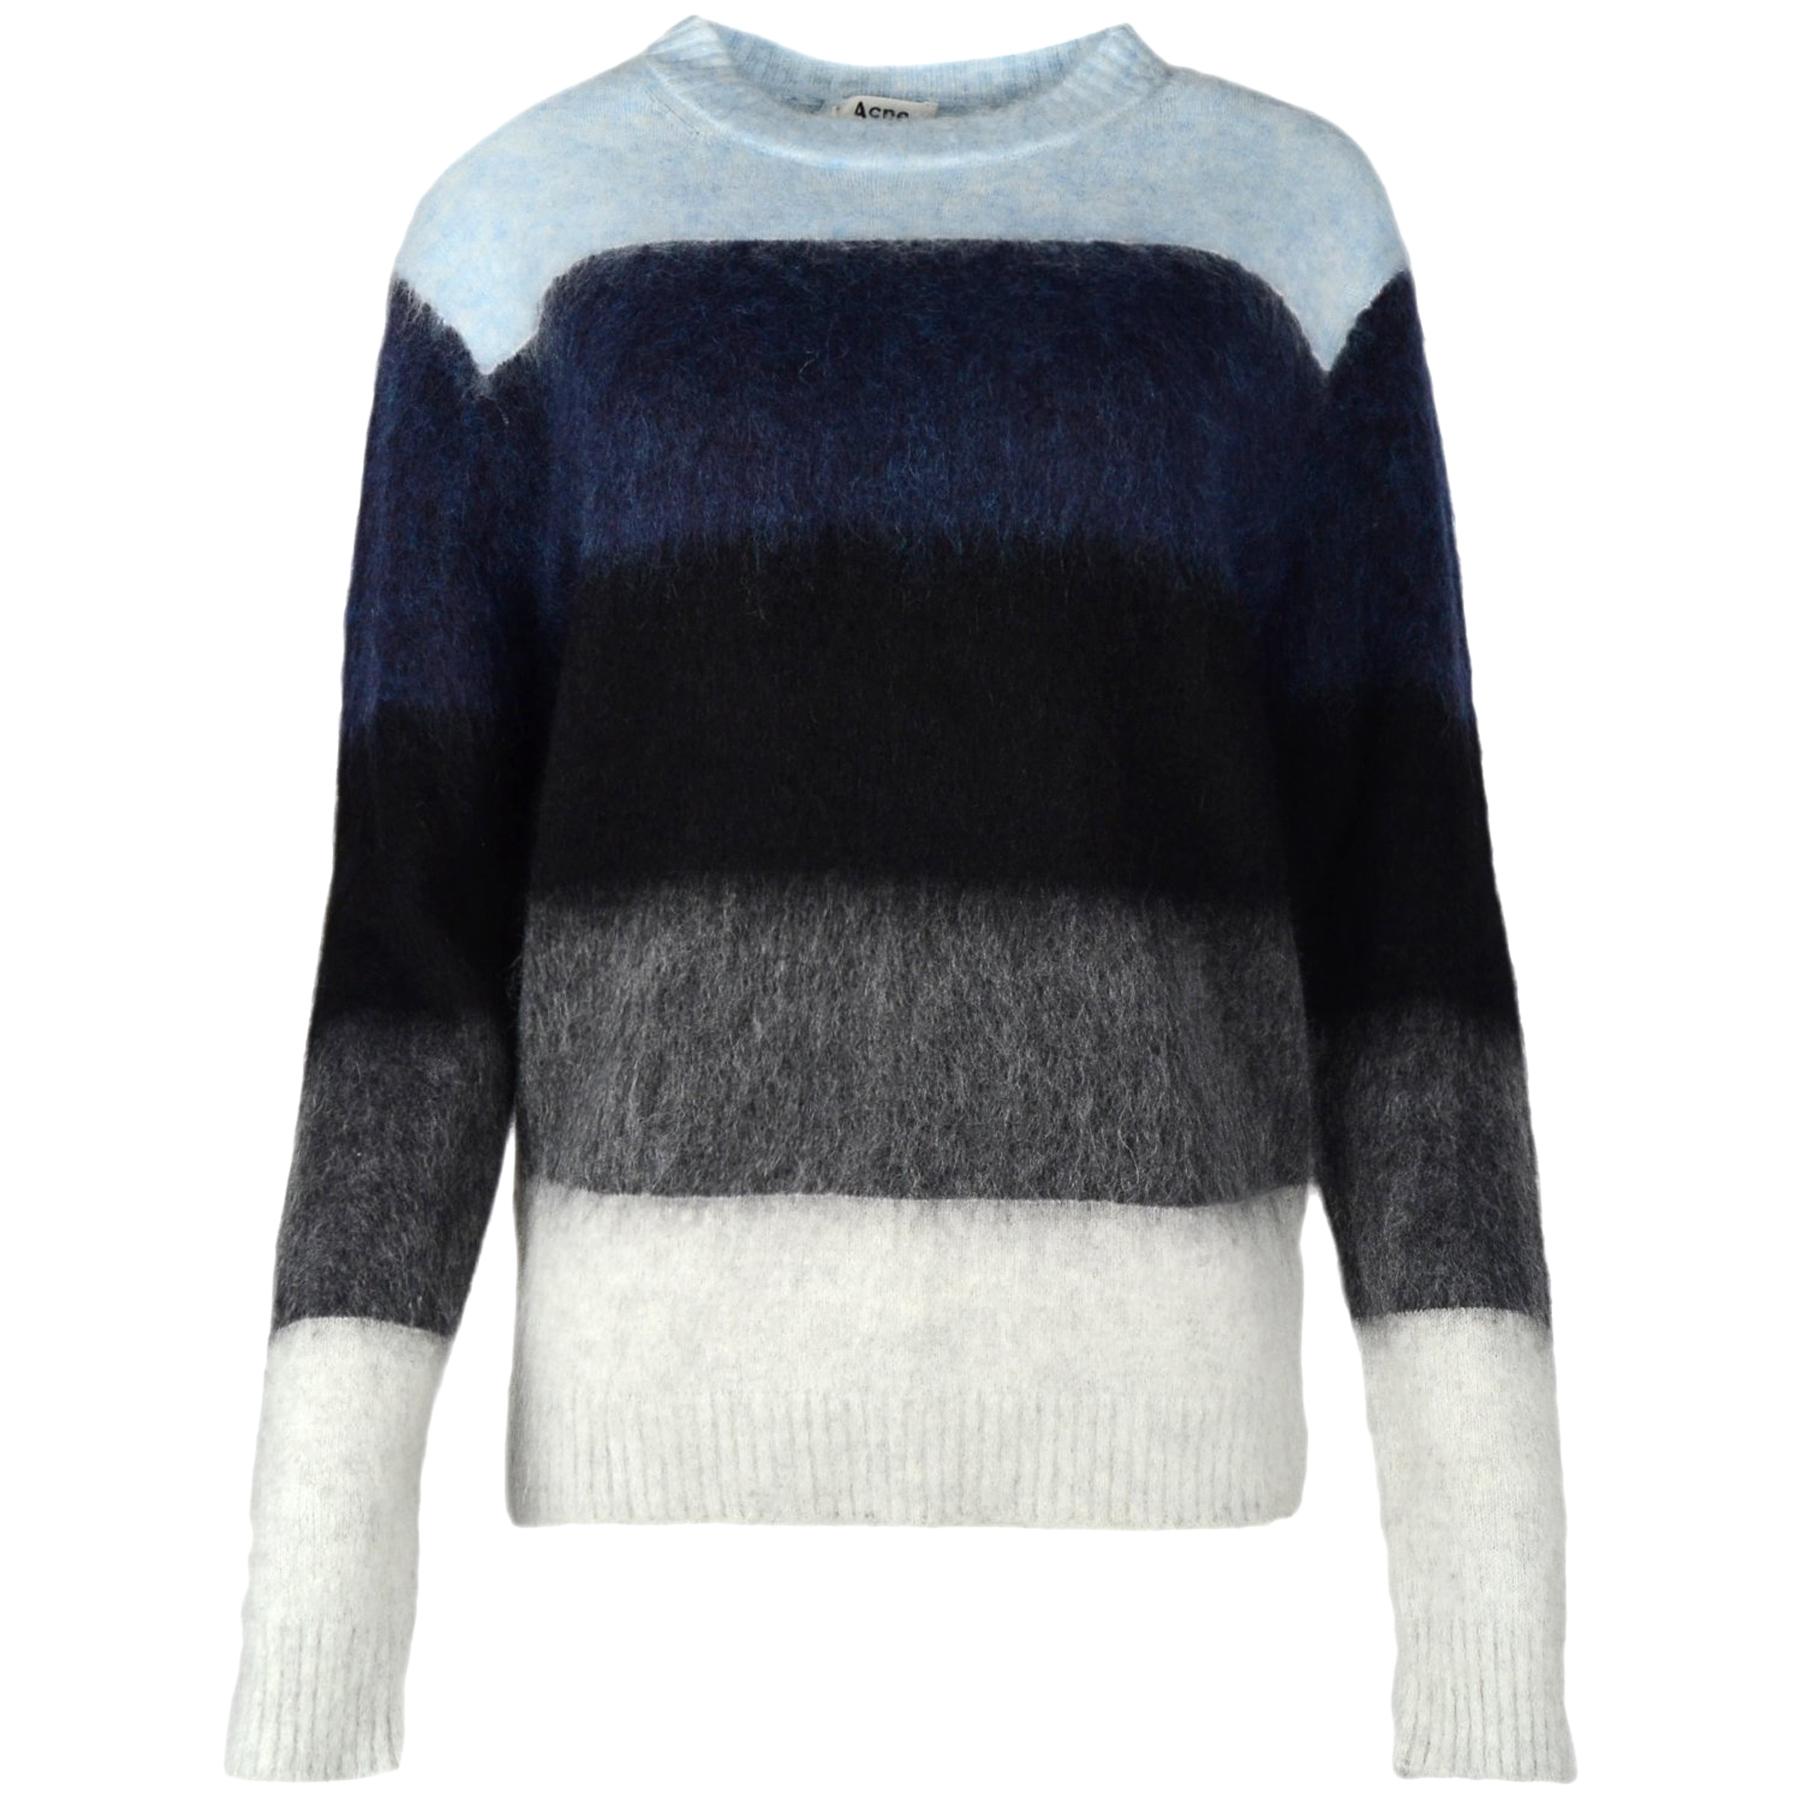 ACNE Studios Blue/Grey/Black Striped Long Sleeve Mohair Sweater NWT Sz XXS